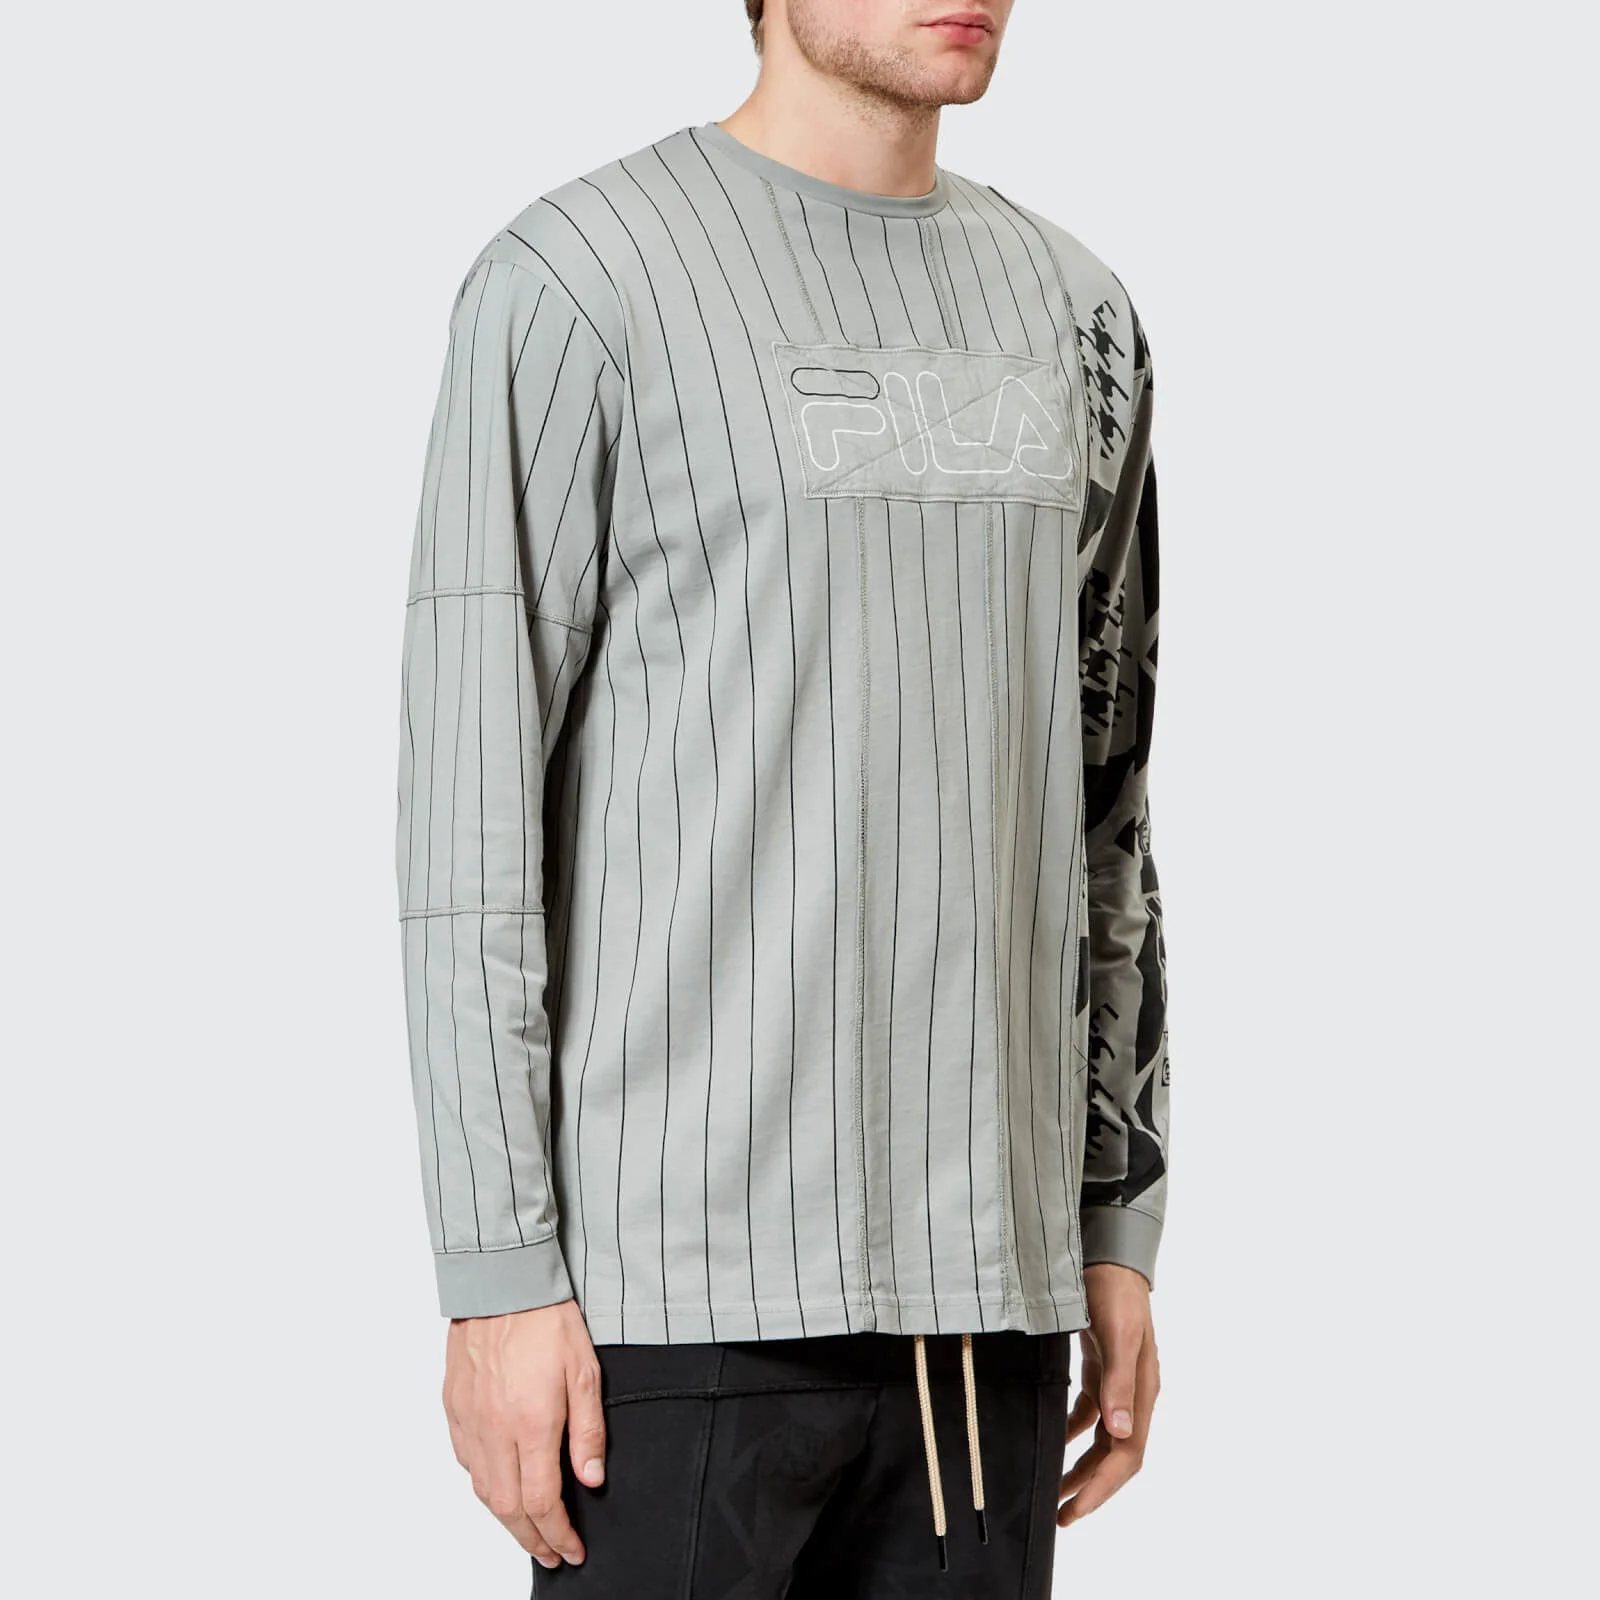 FILA X Liam Hodges Men's Long Sleeve Stripe T-Shirt - Grey Stripe Image 1